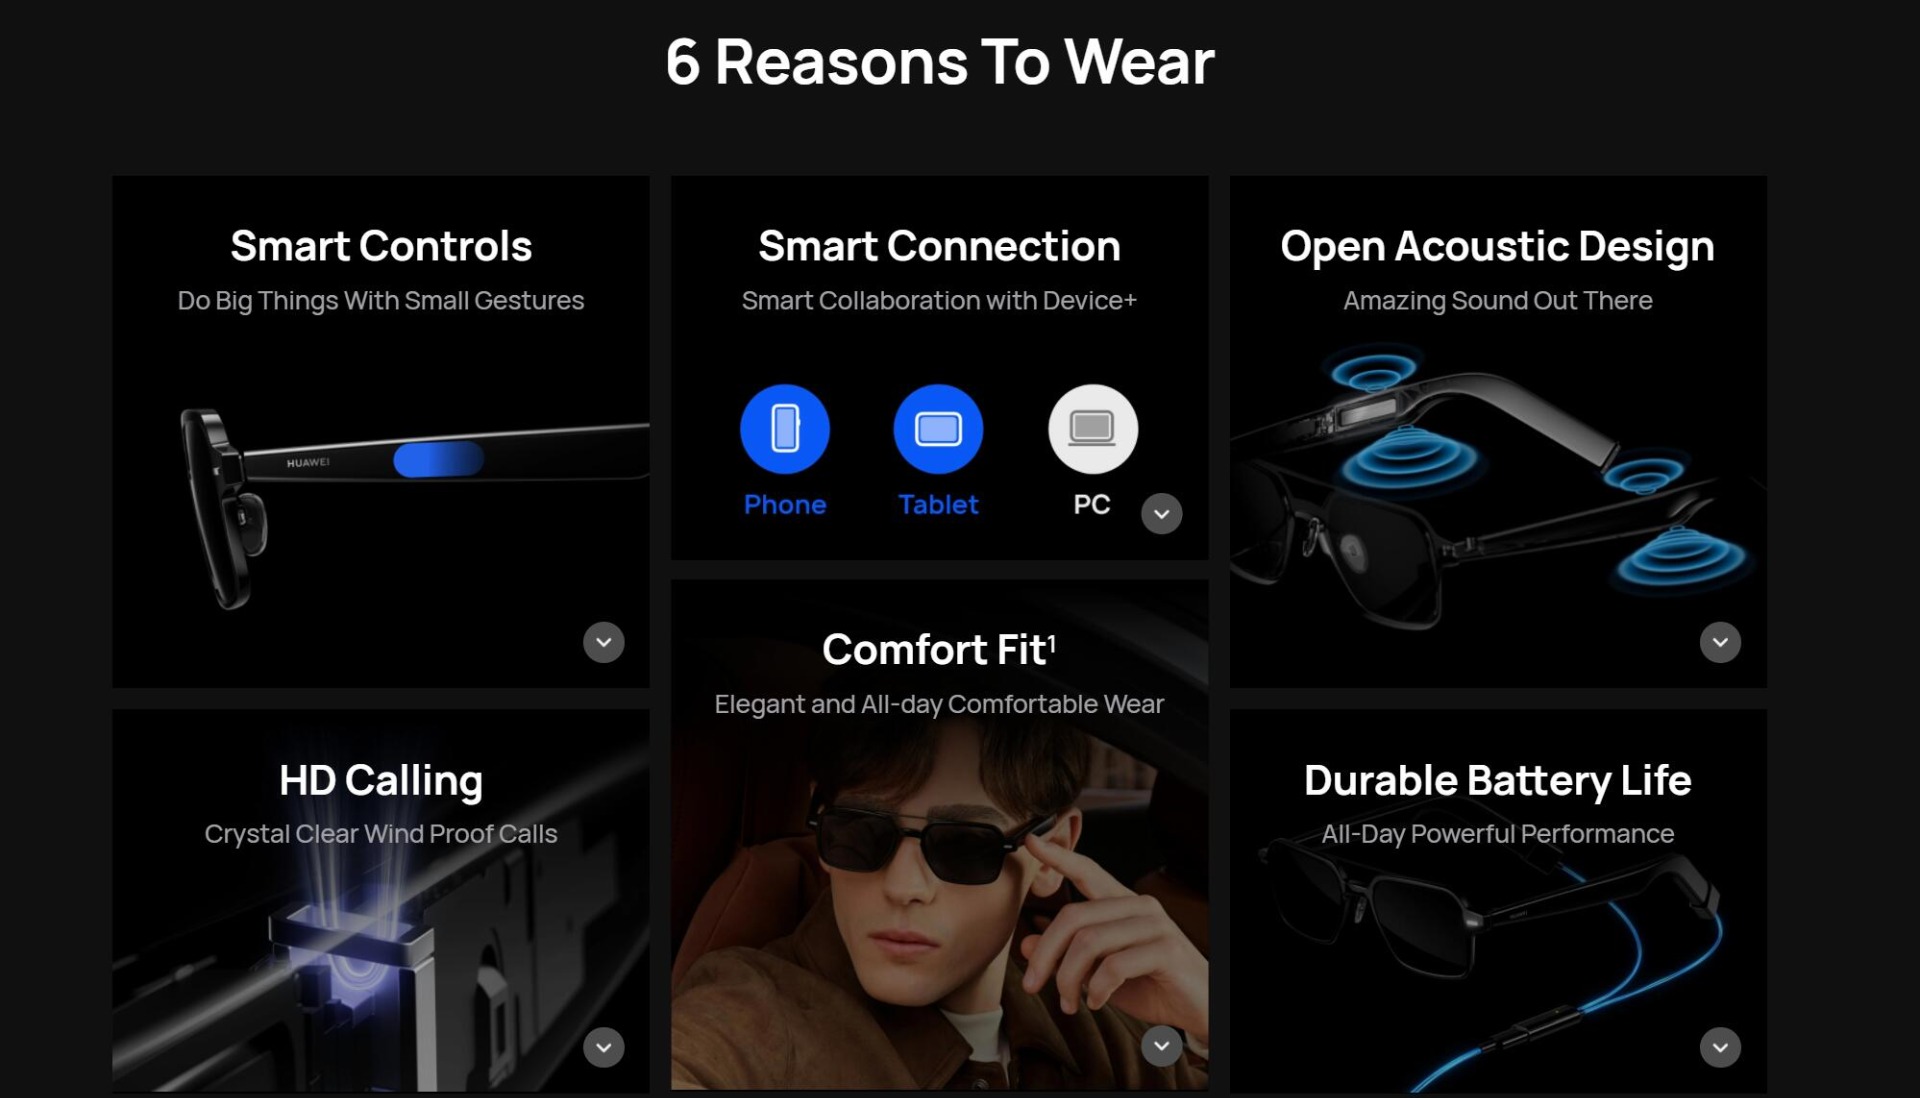 Huawei Eyewear Smart Glasses